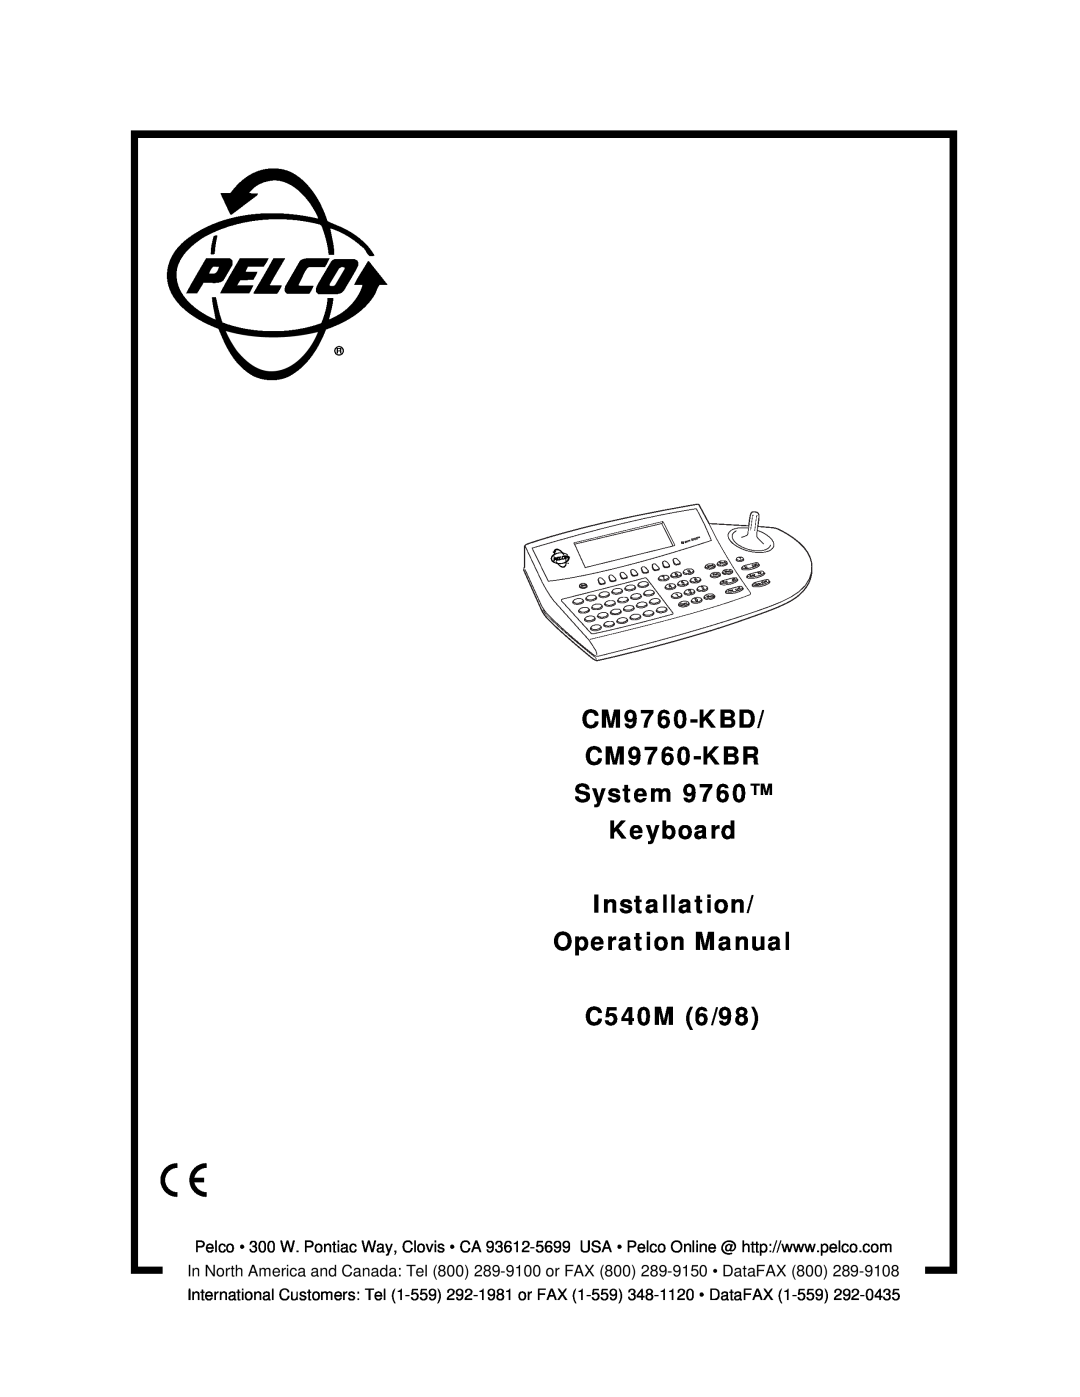 Pelco C540M (6/98) operation manual CM9760-KBD CM9760-KBR System Keyboard 